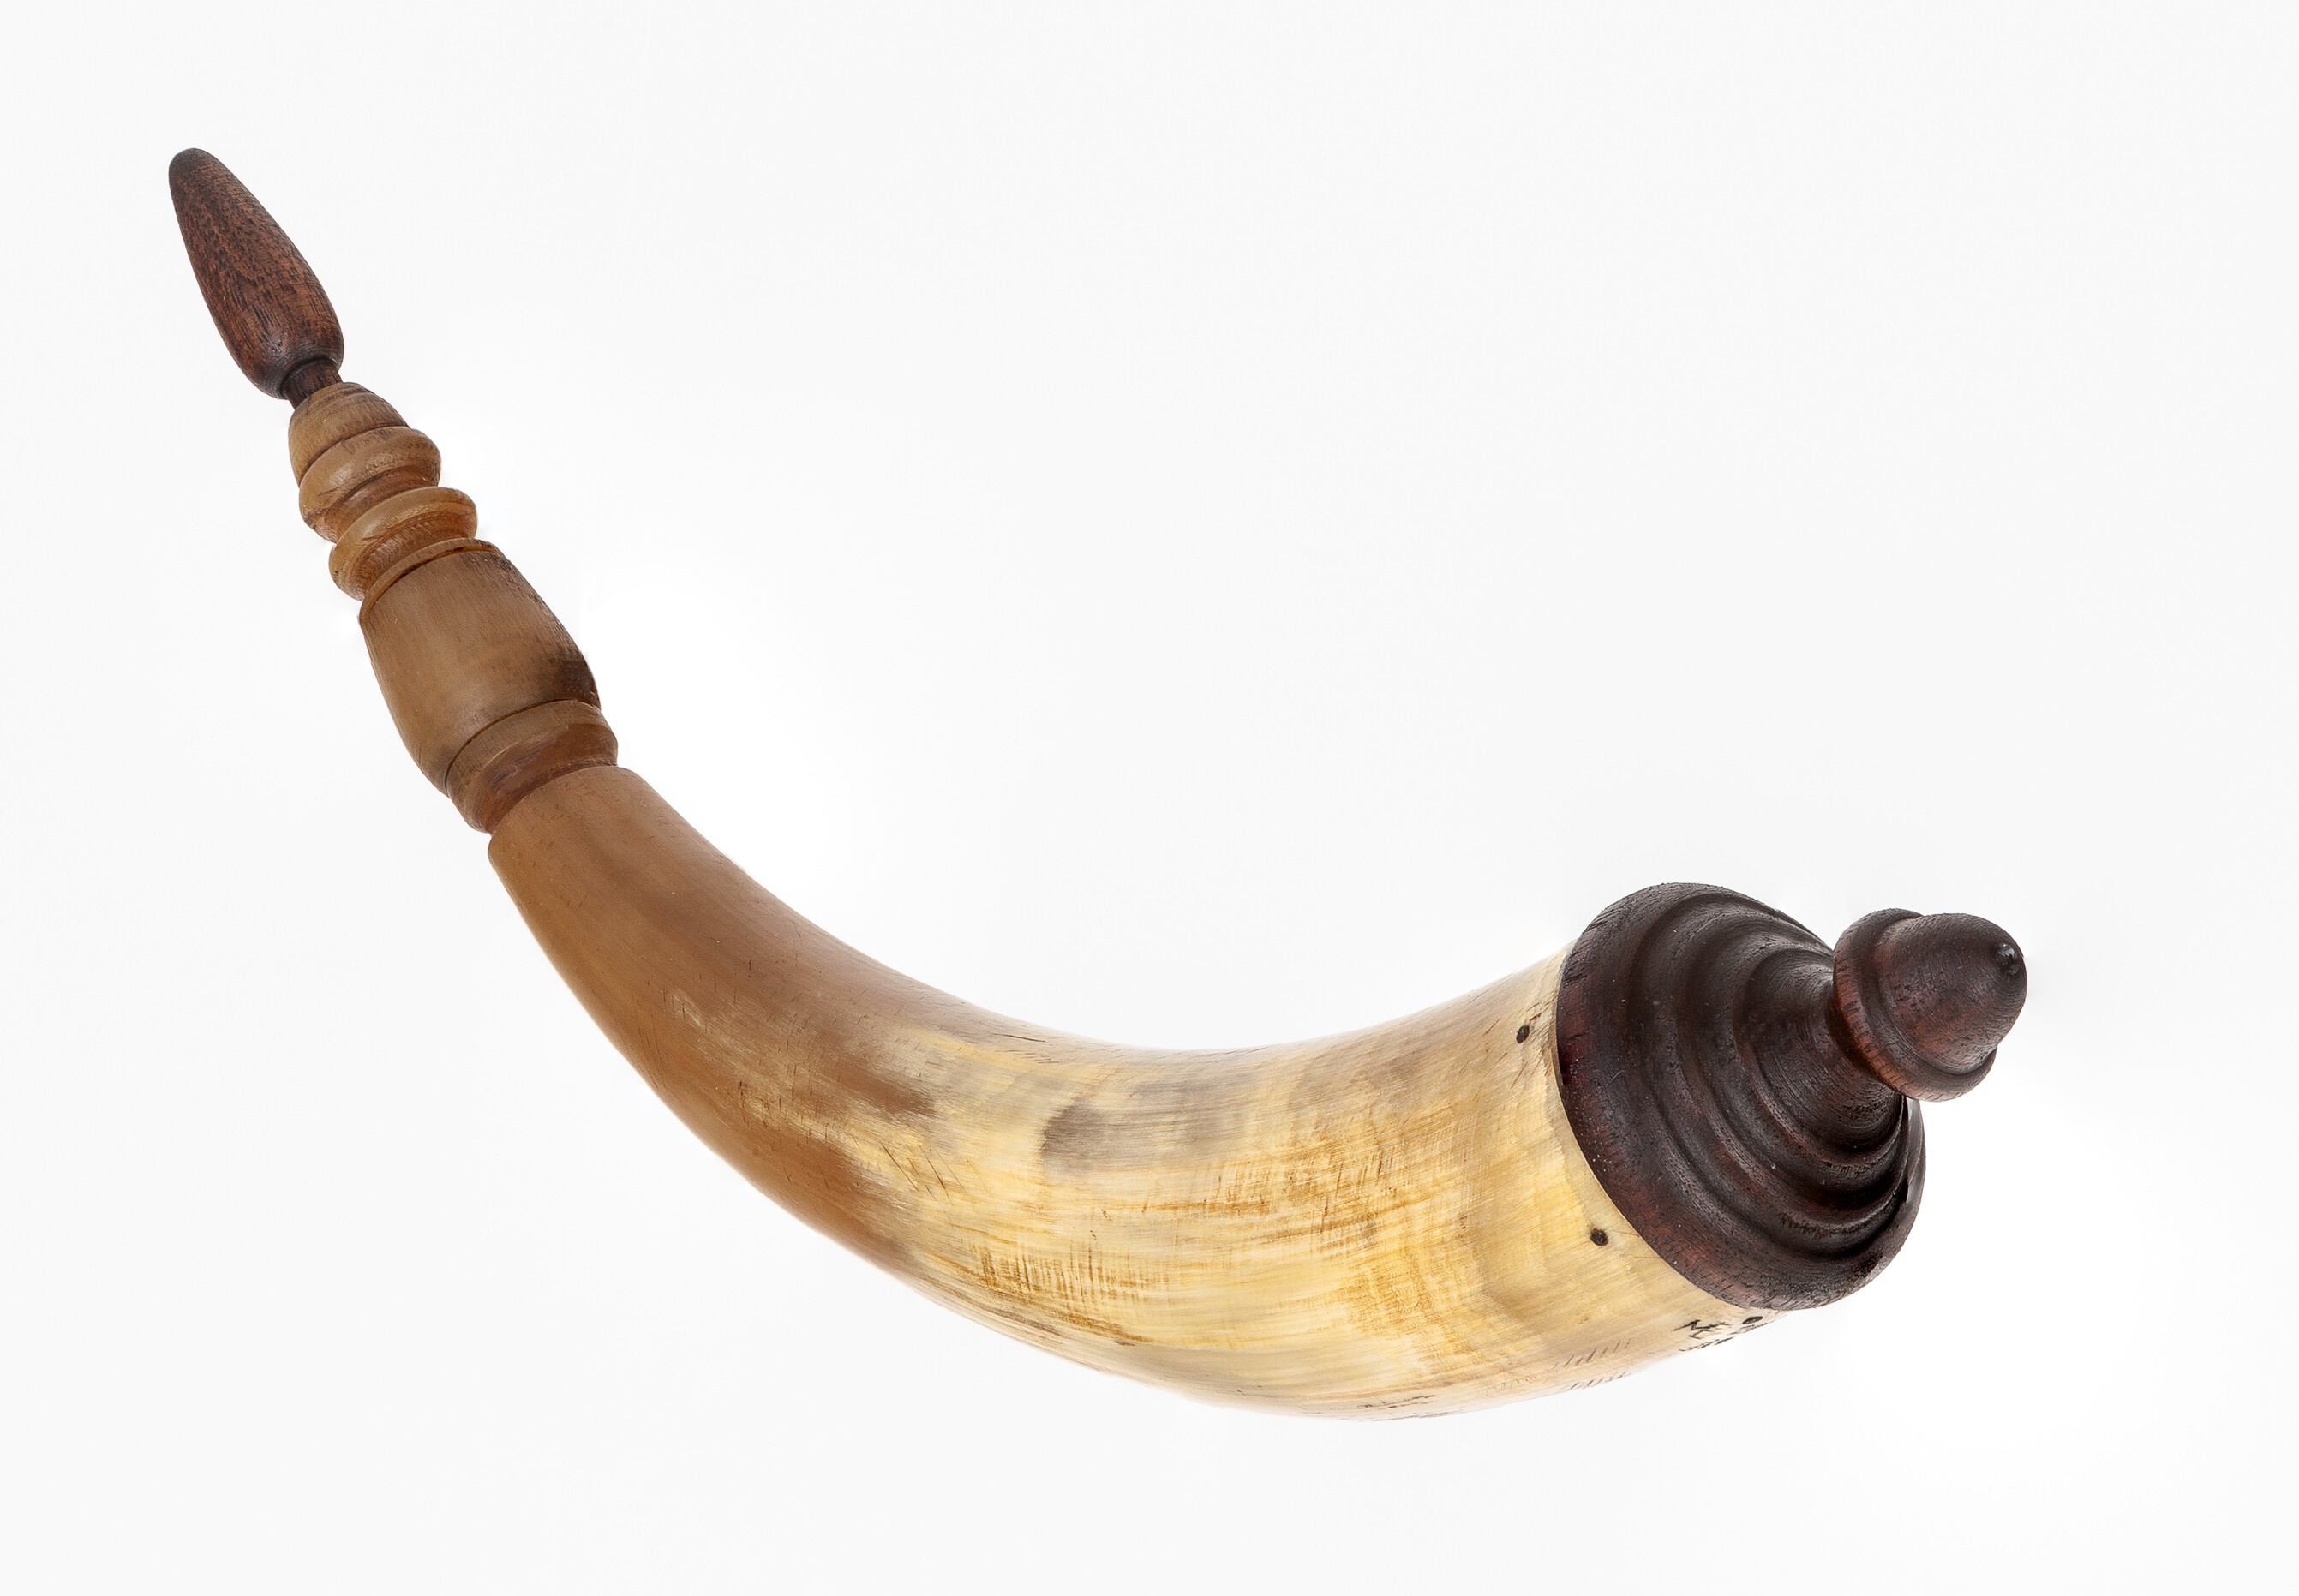 Horn #39 - Virginia "Acorn" screw-tip powder horn - End